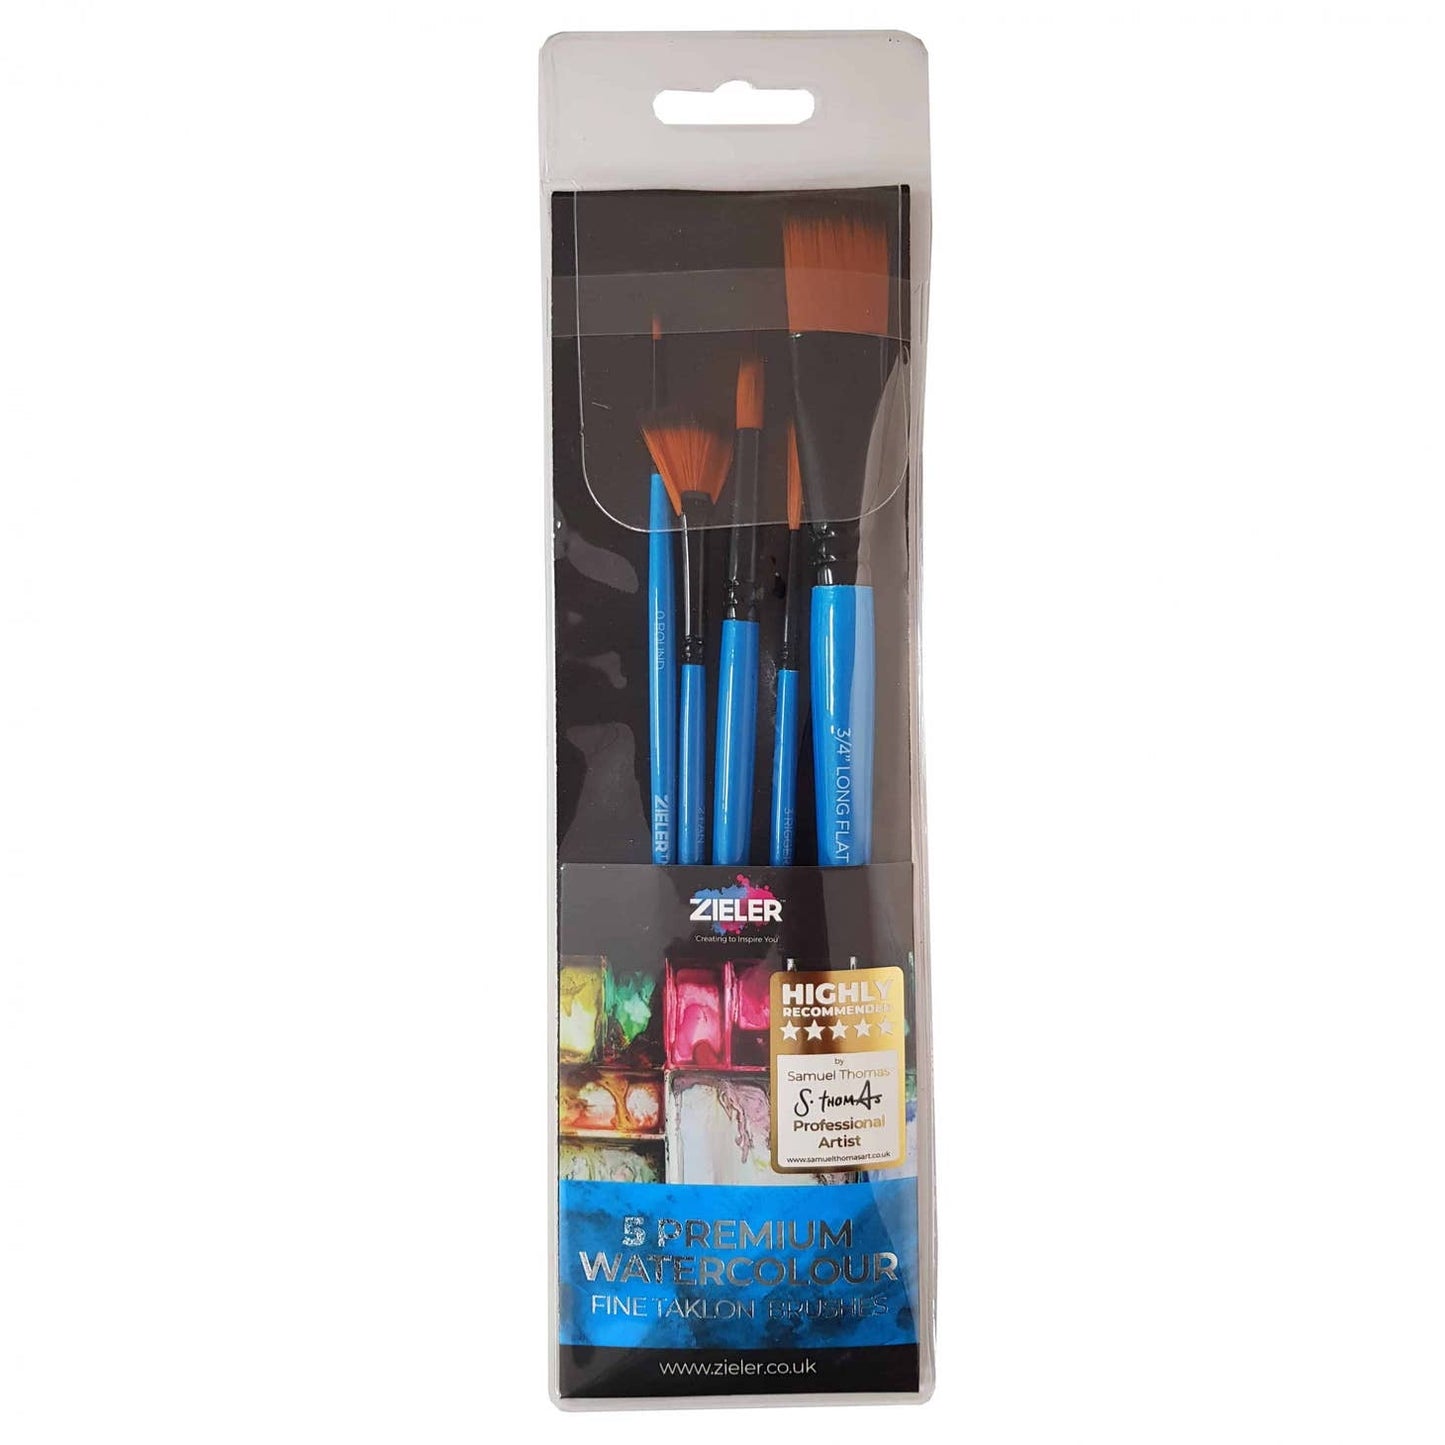 Premium Watercolour Brush Wallet (Set of 5) - by Zieler